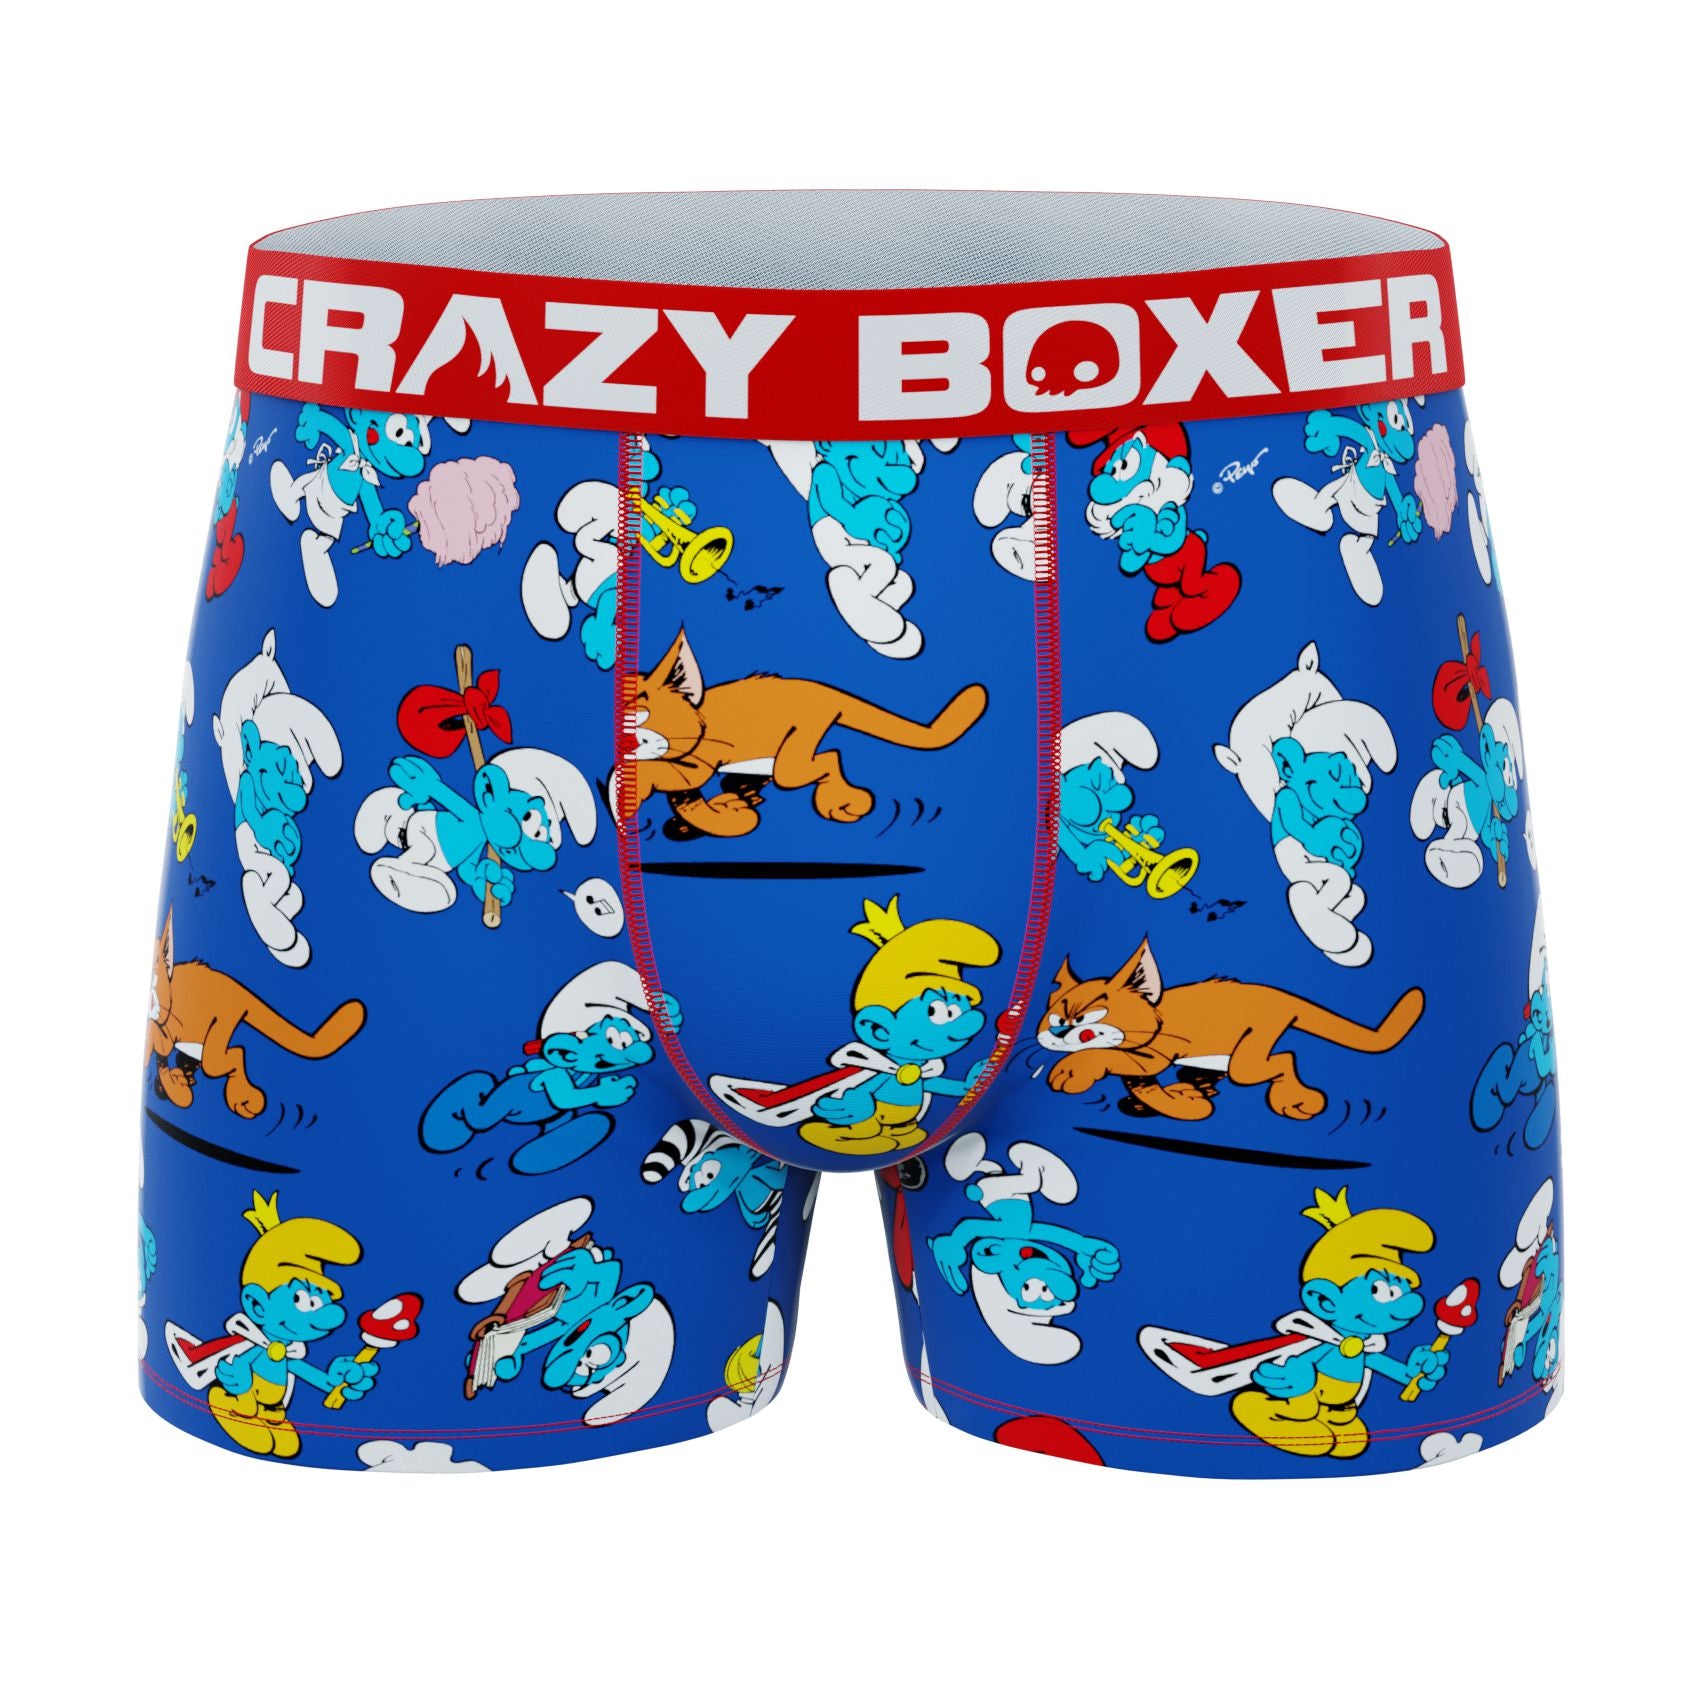 CRAZYBOXER The Smurfs Characters Men's Boxer Briefs